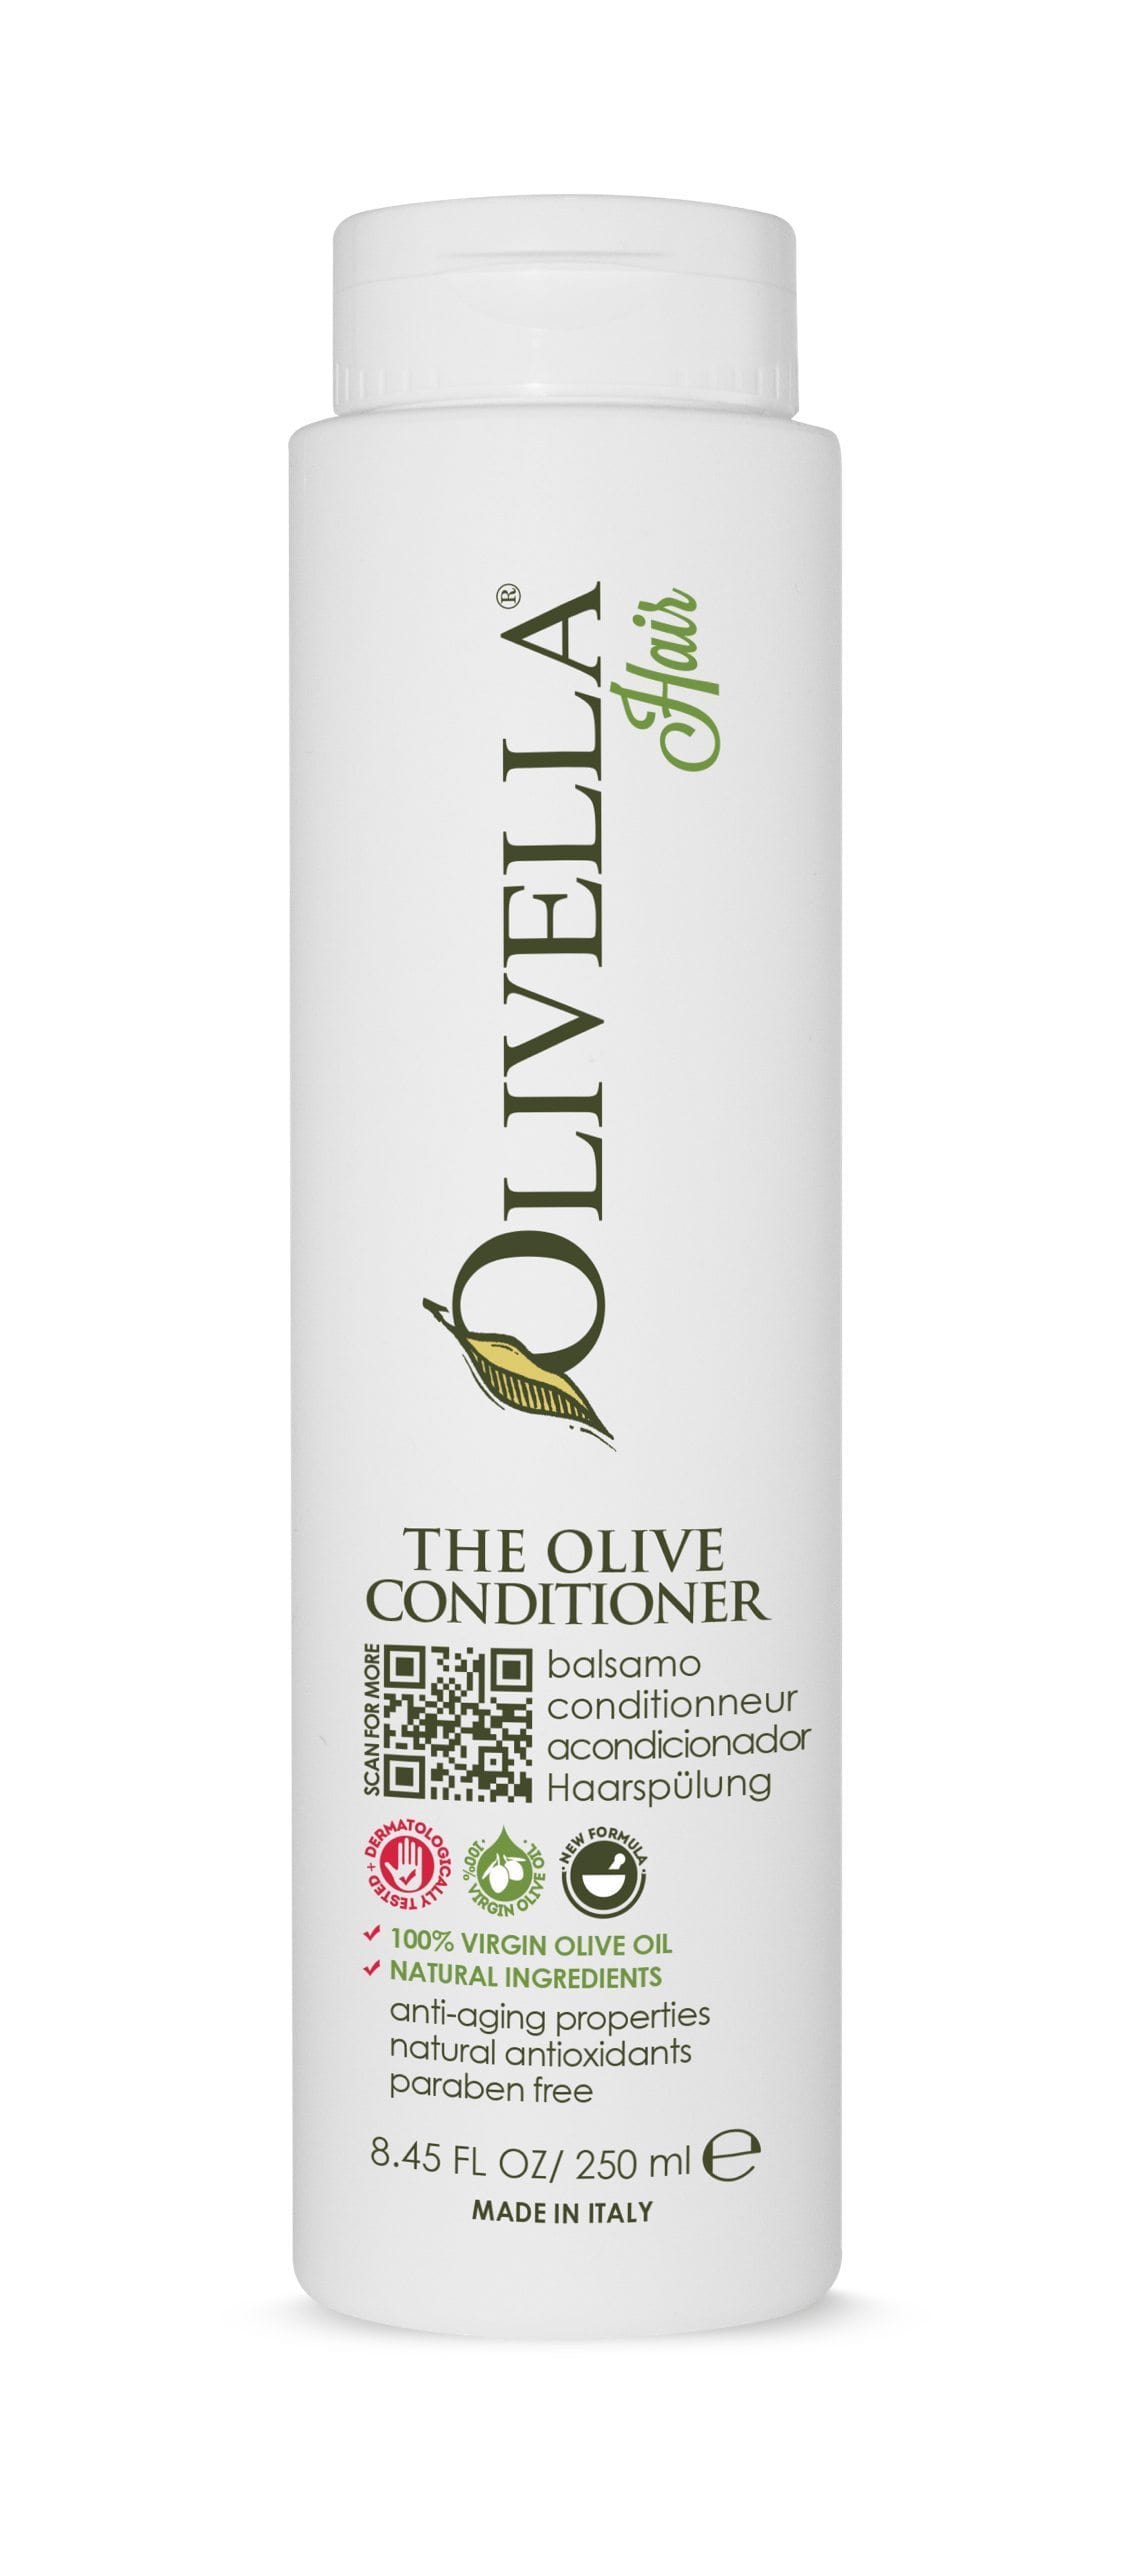 Olivella The Olive Conditioner - Olivella Europe